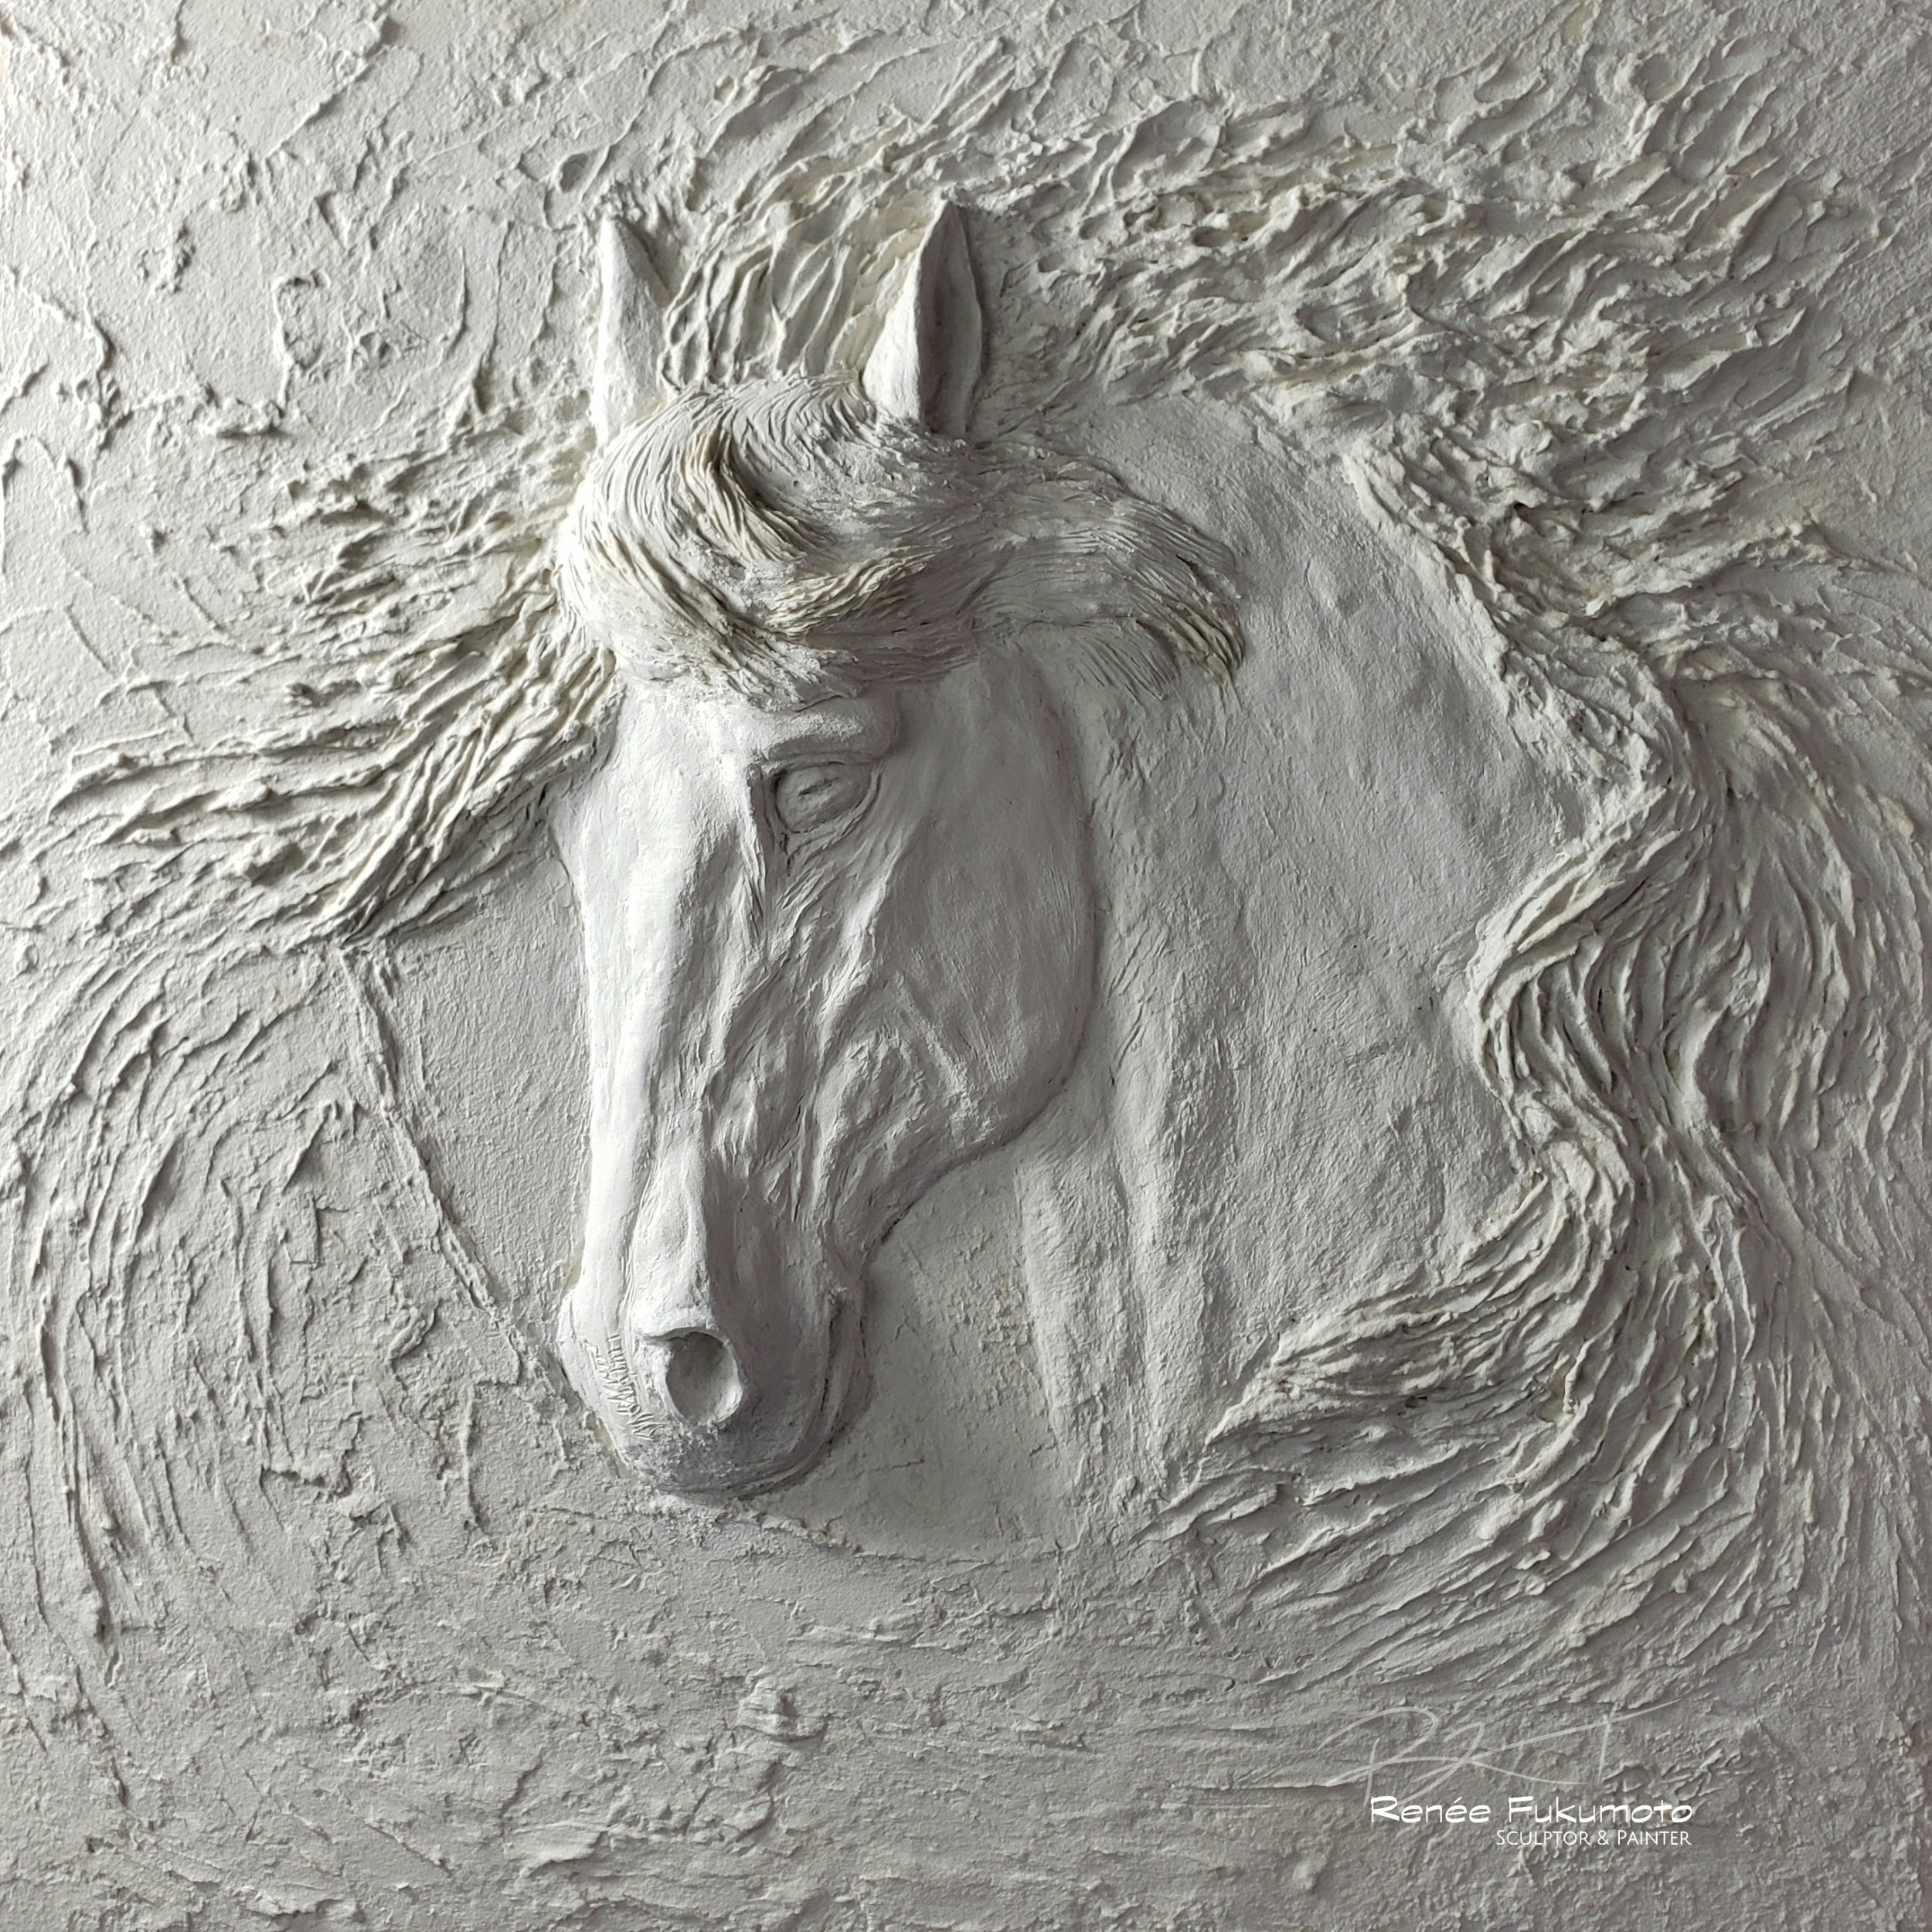 processed_White horse relief sculpture 12x renee fukumoto.jpg